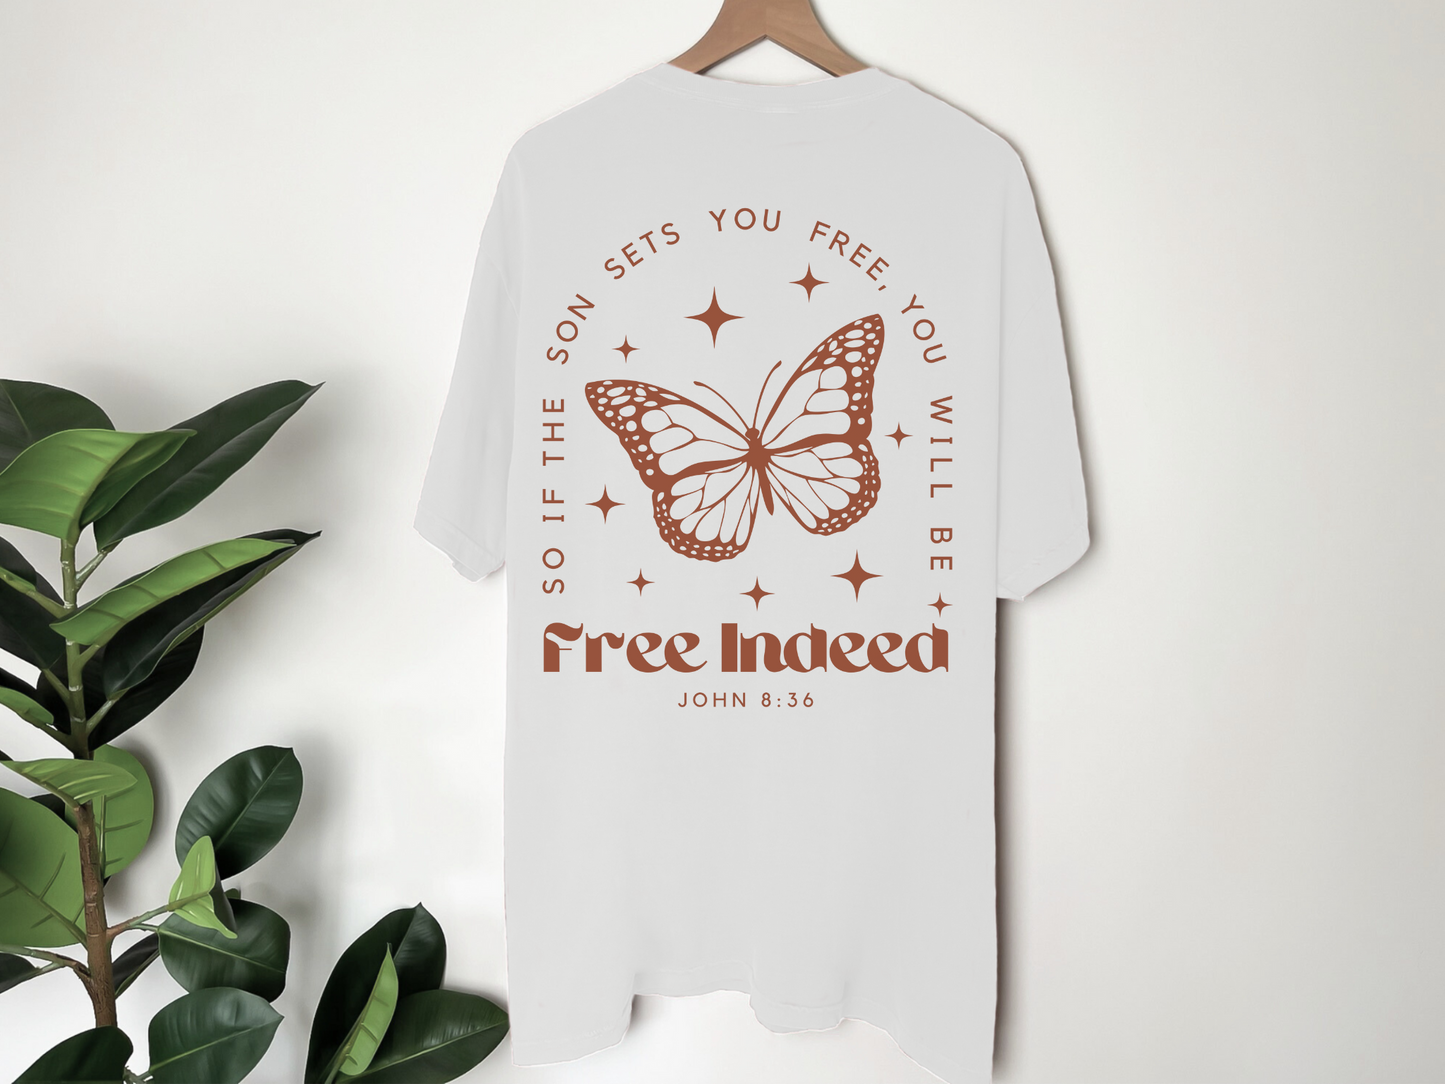 True Freedom in Christ T- Shirt